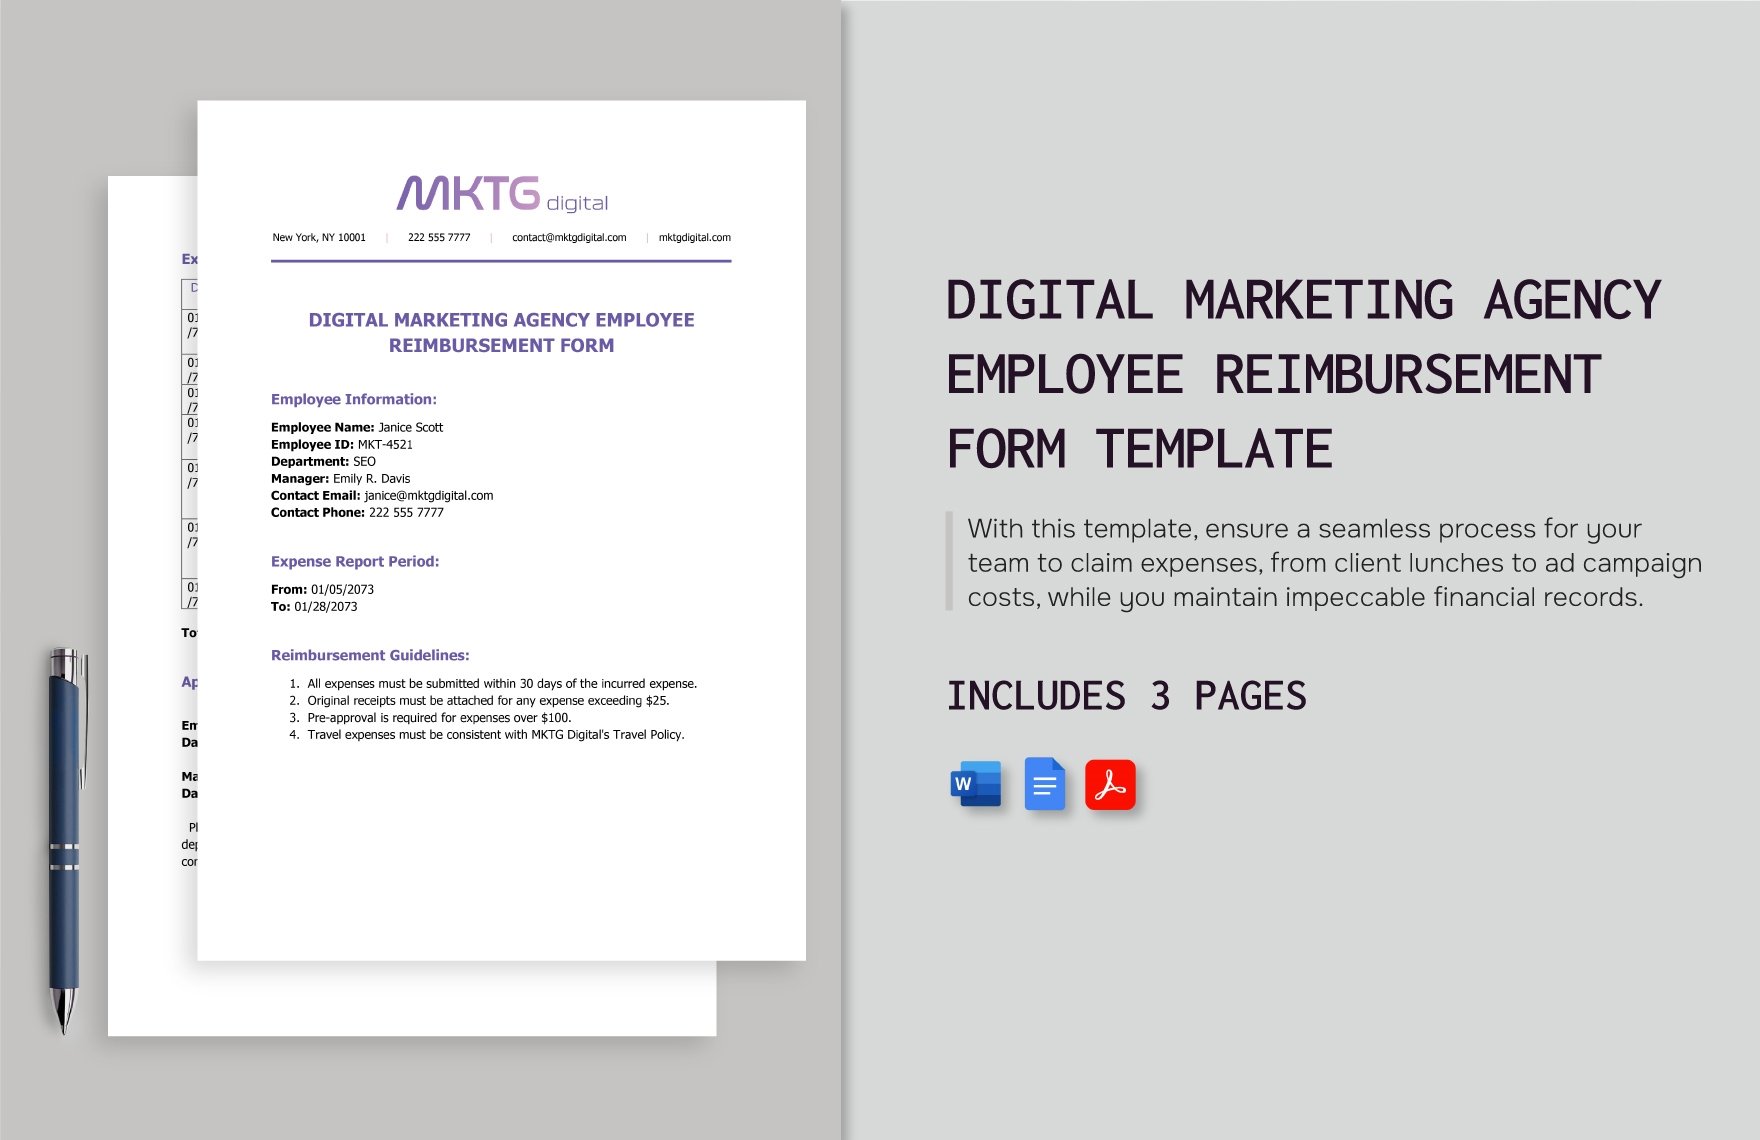 Digital Marketing Agency Employee Reimbursement Form Template